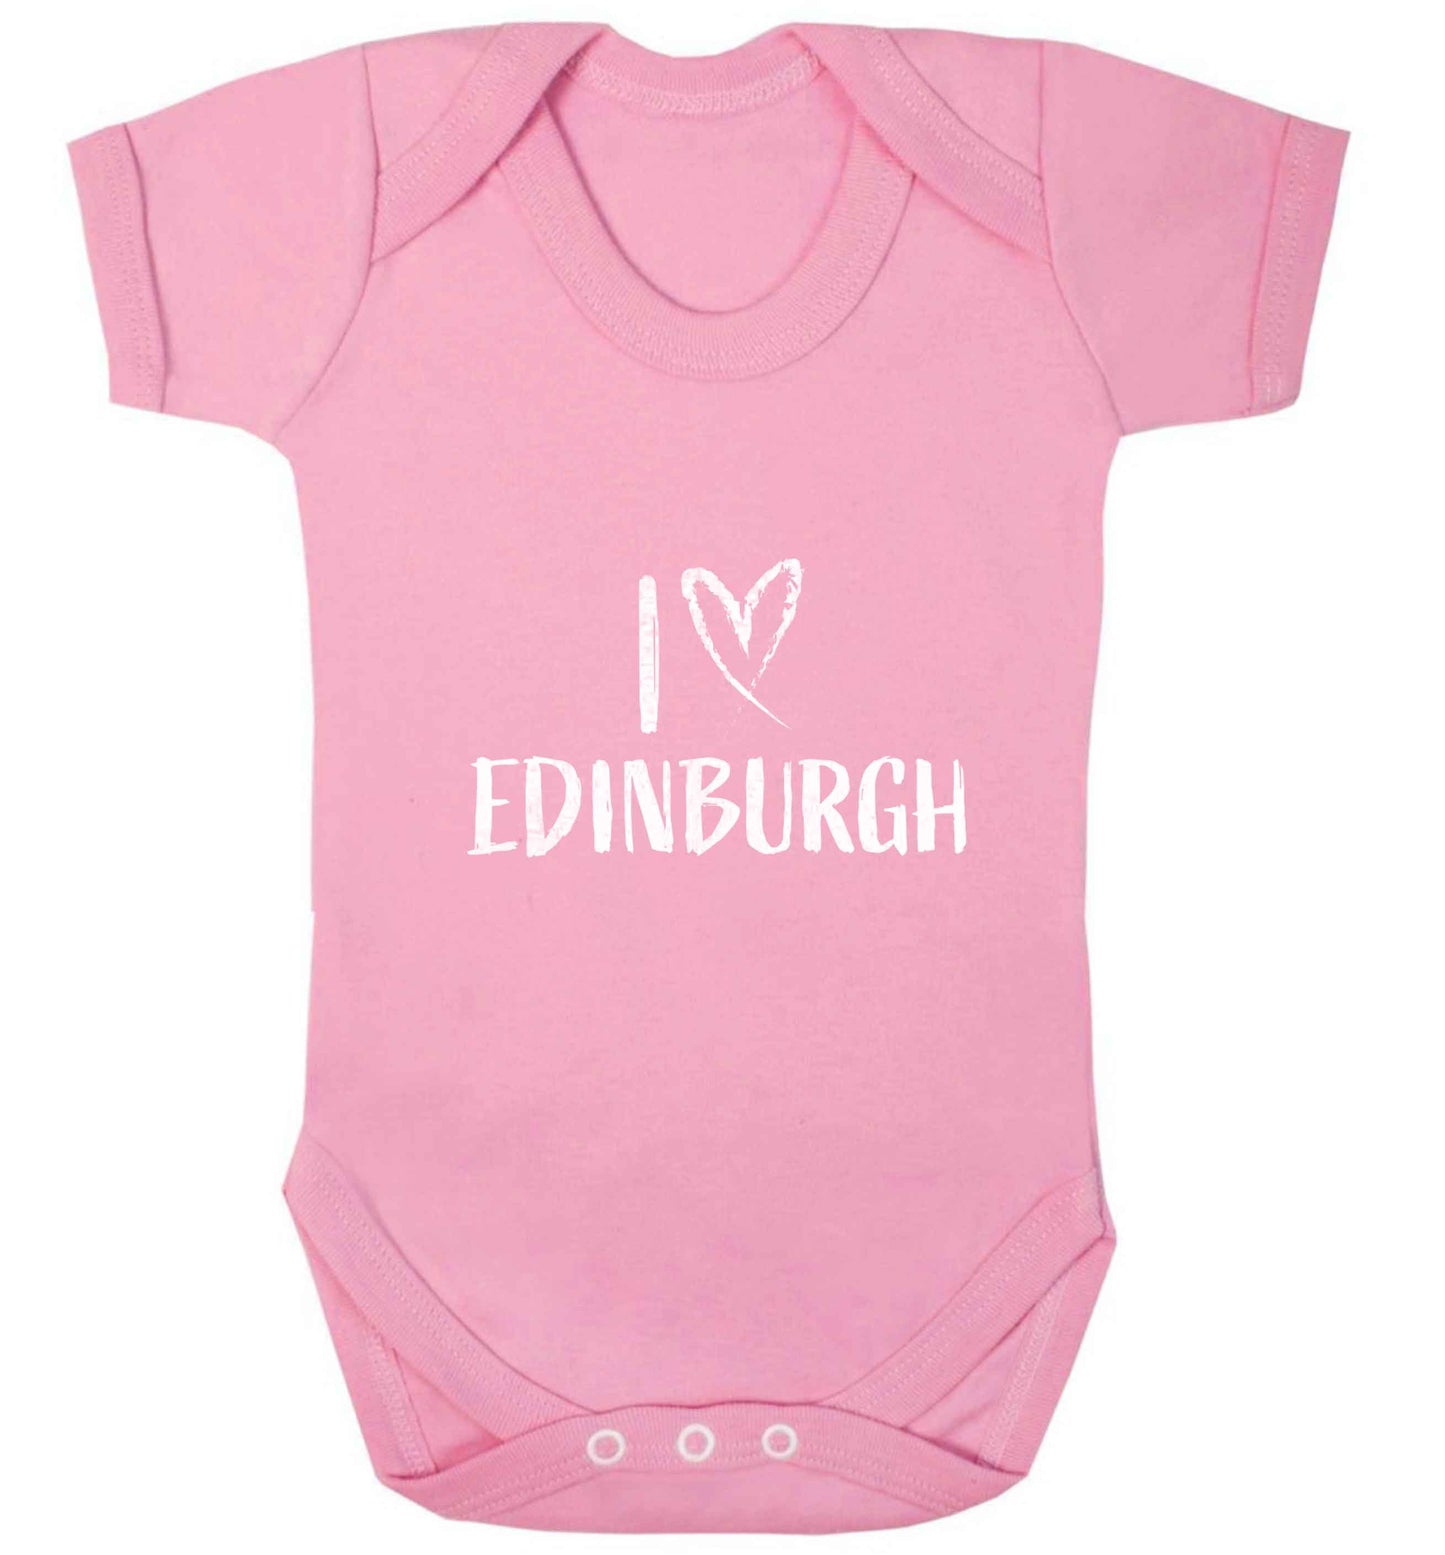 I love Edinburgh baby vest pale pink 18-24 months